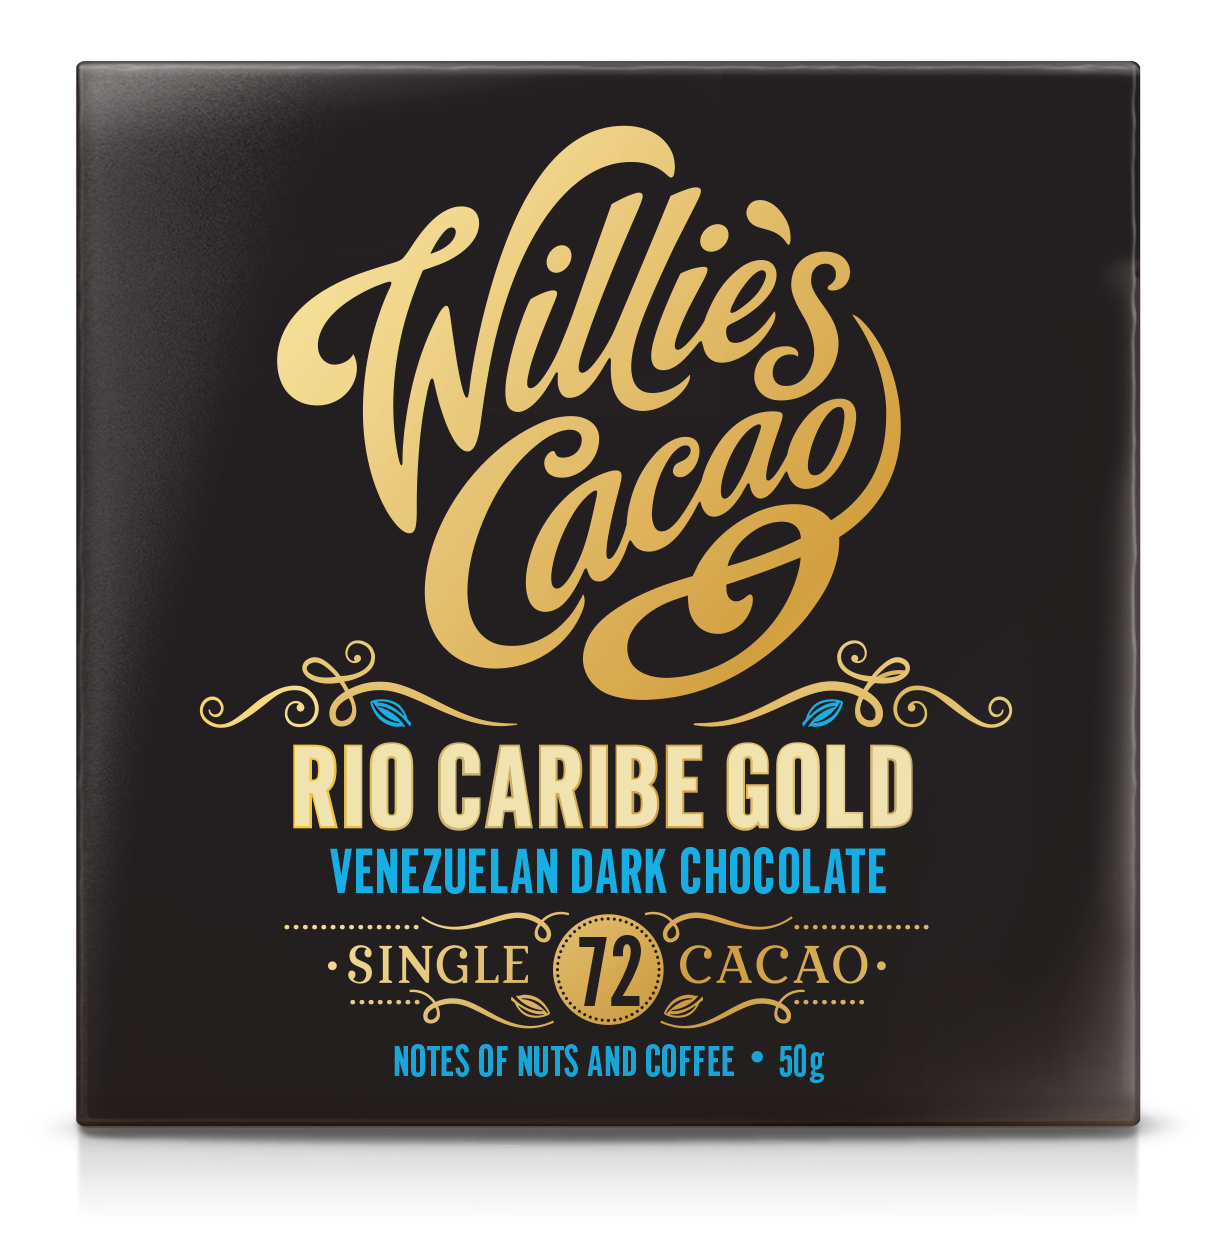 Willie's Cacao Rio Caribe Gold 72% Dark Chocolate Bar